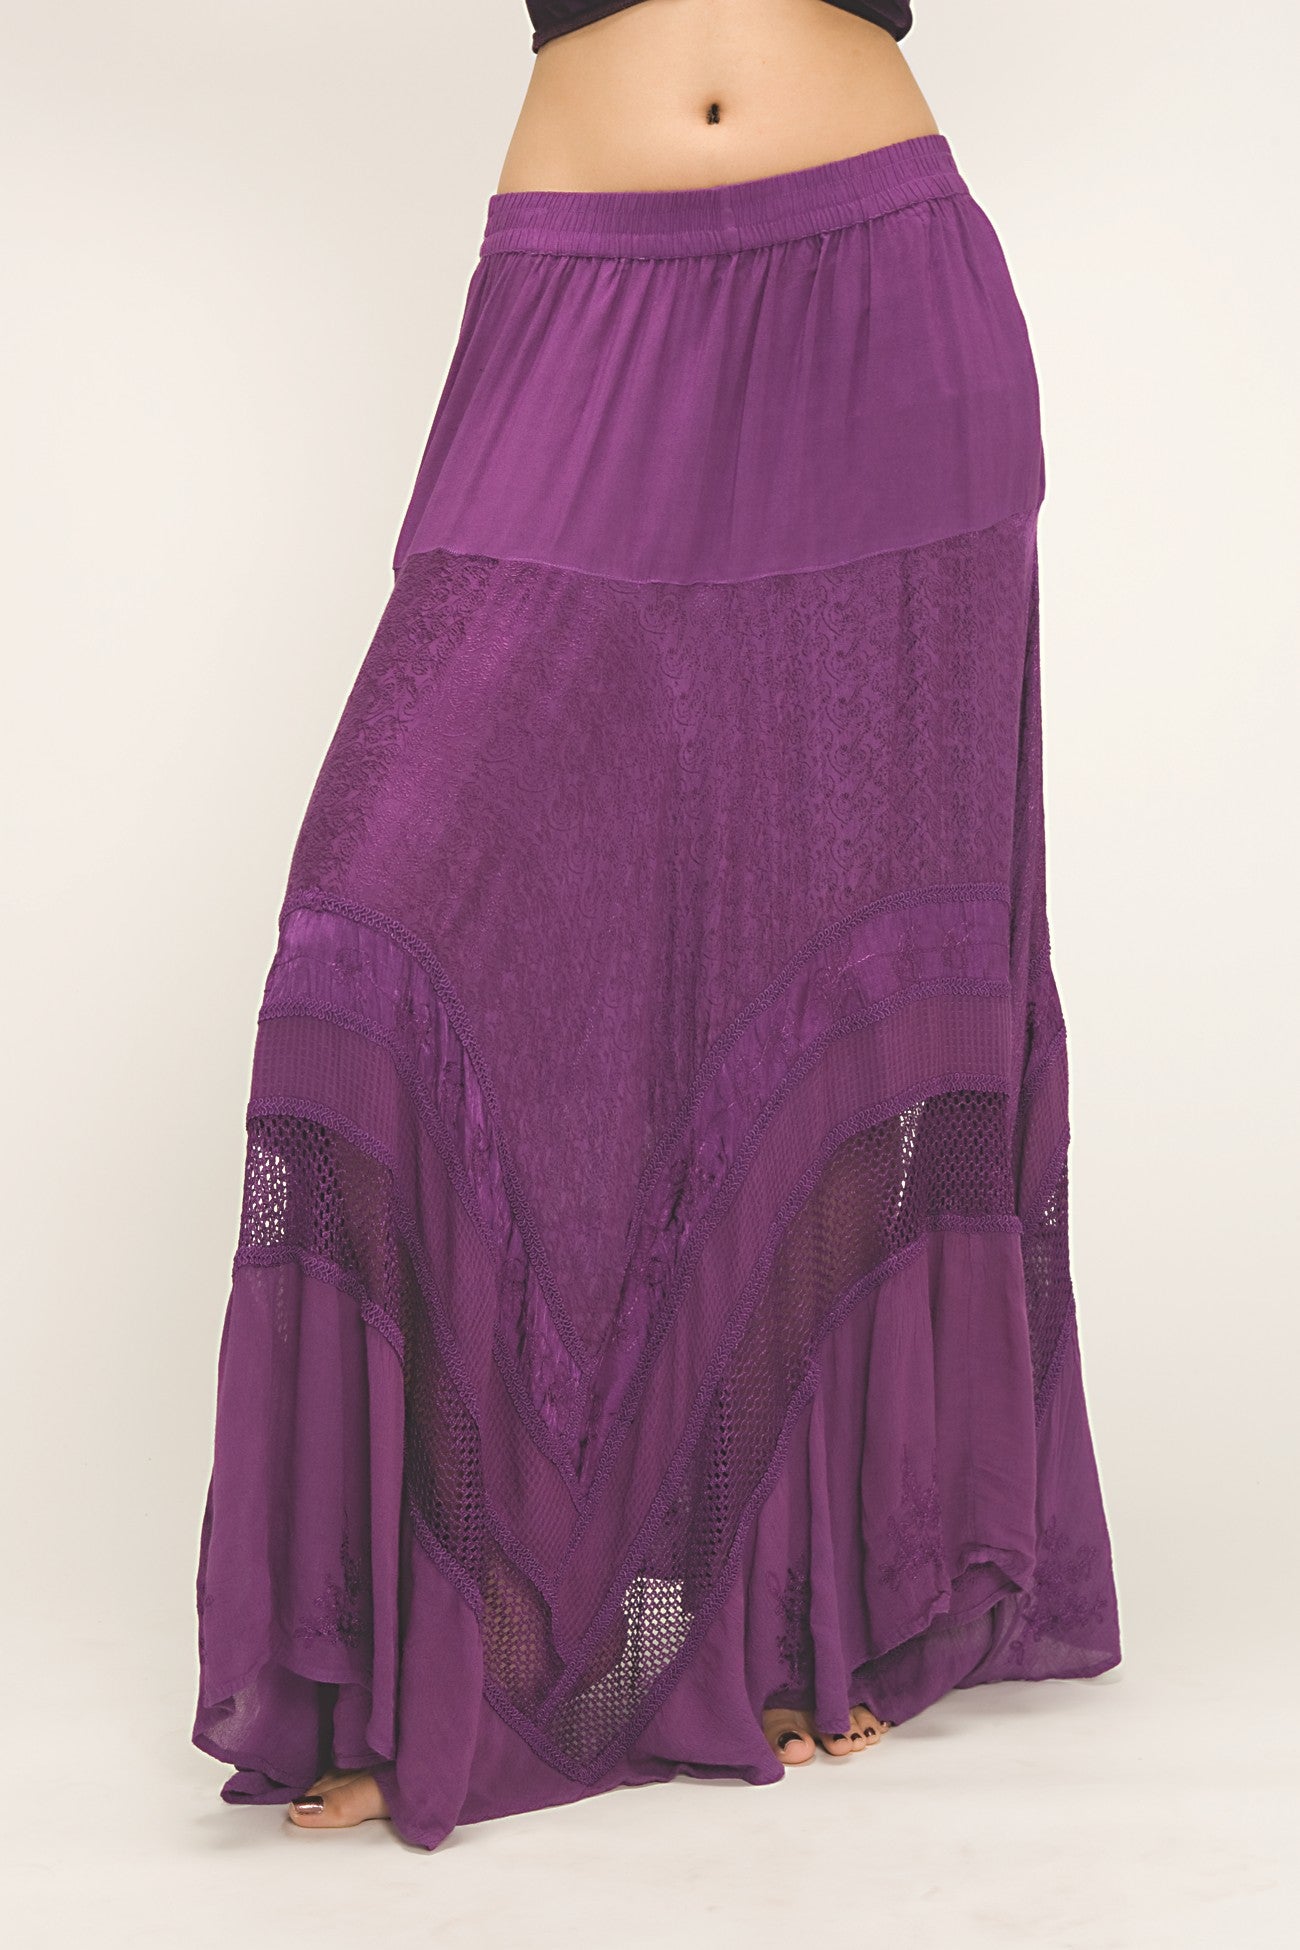 Purple Brocade Gypsy Belly Dance Skirt 